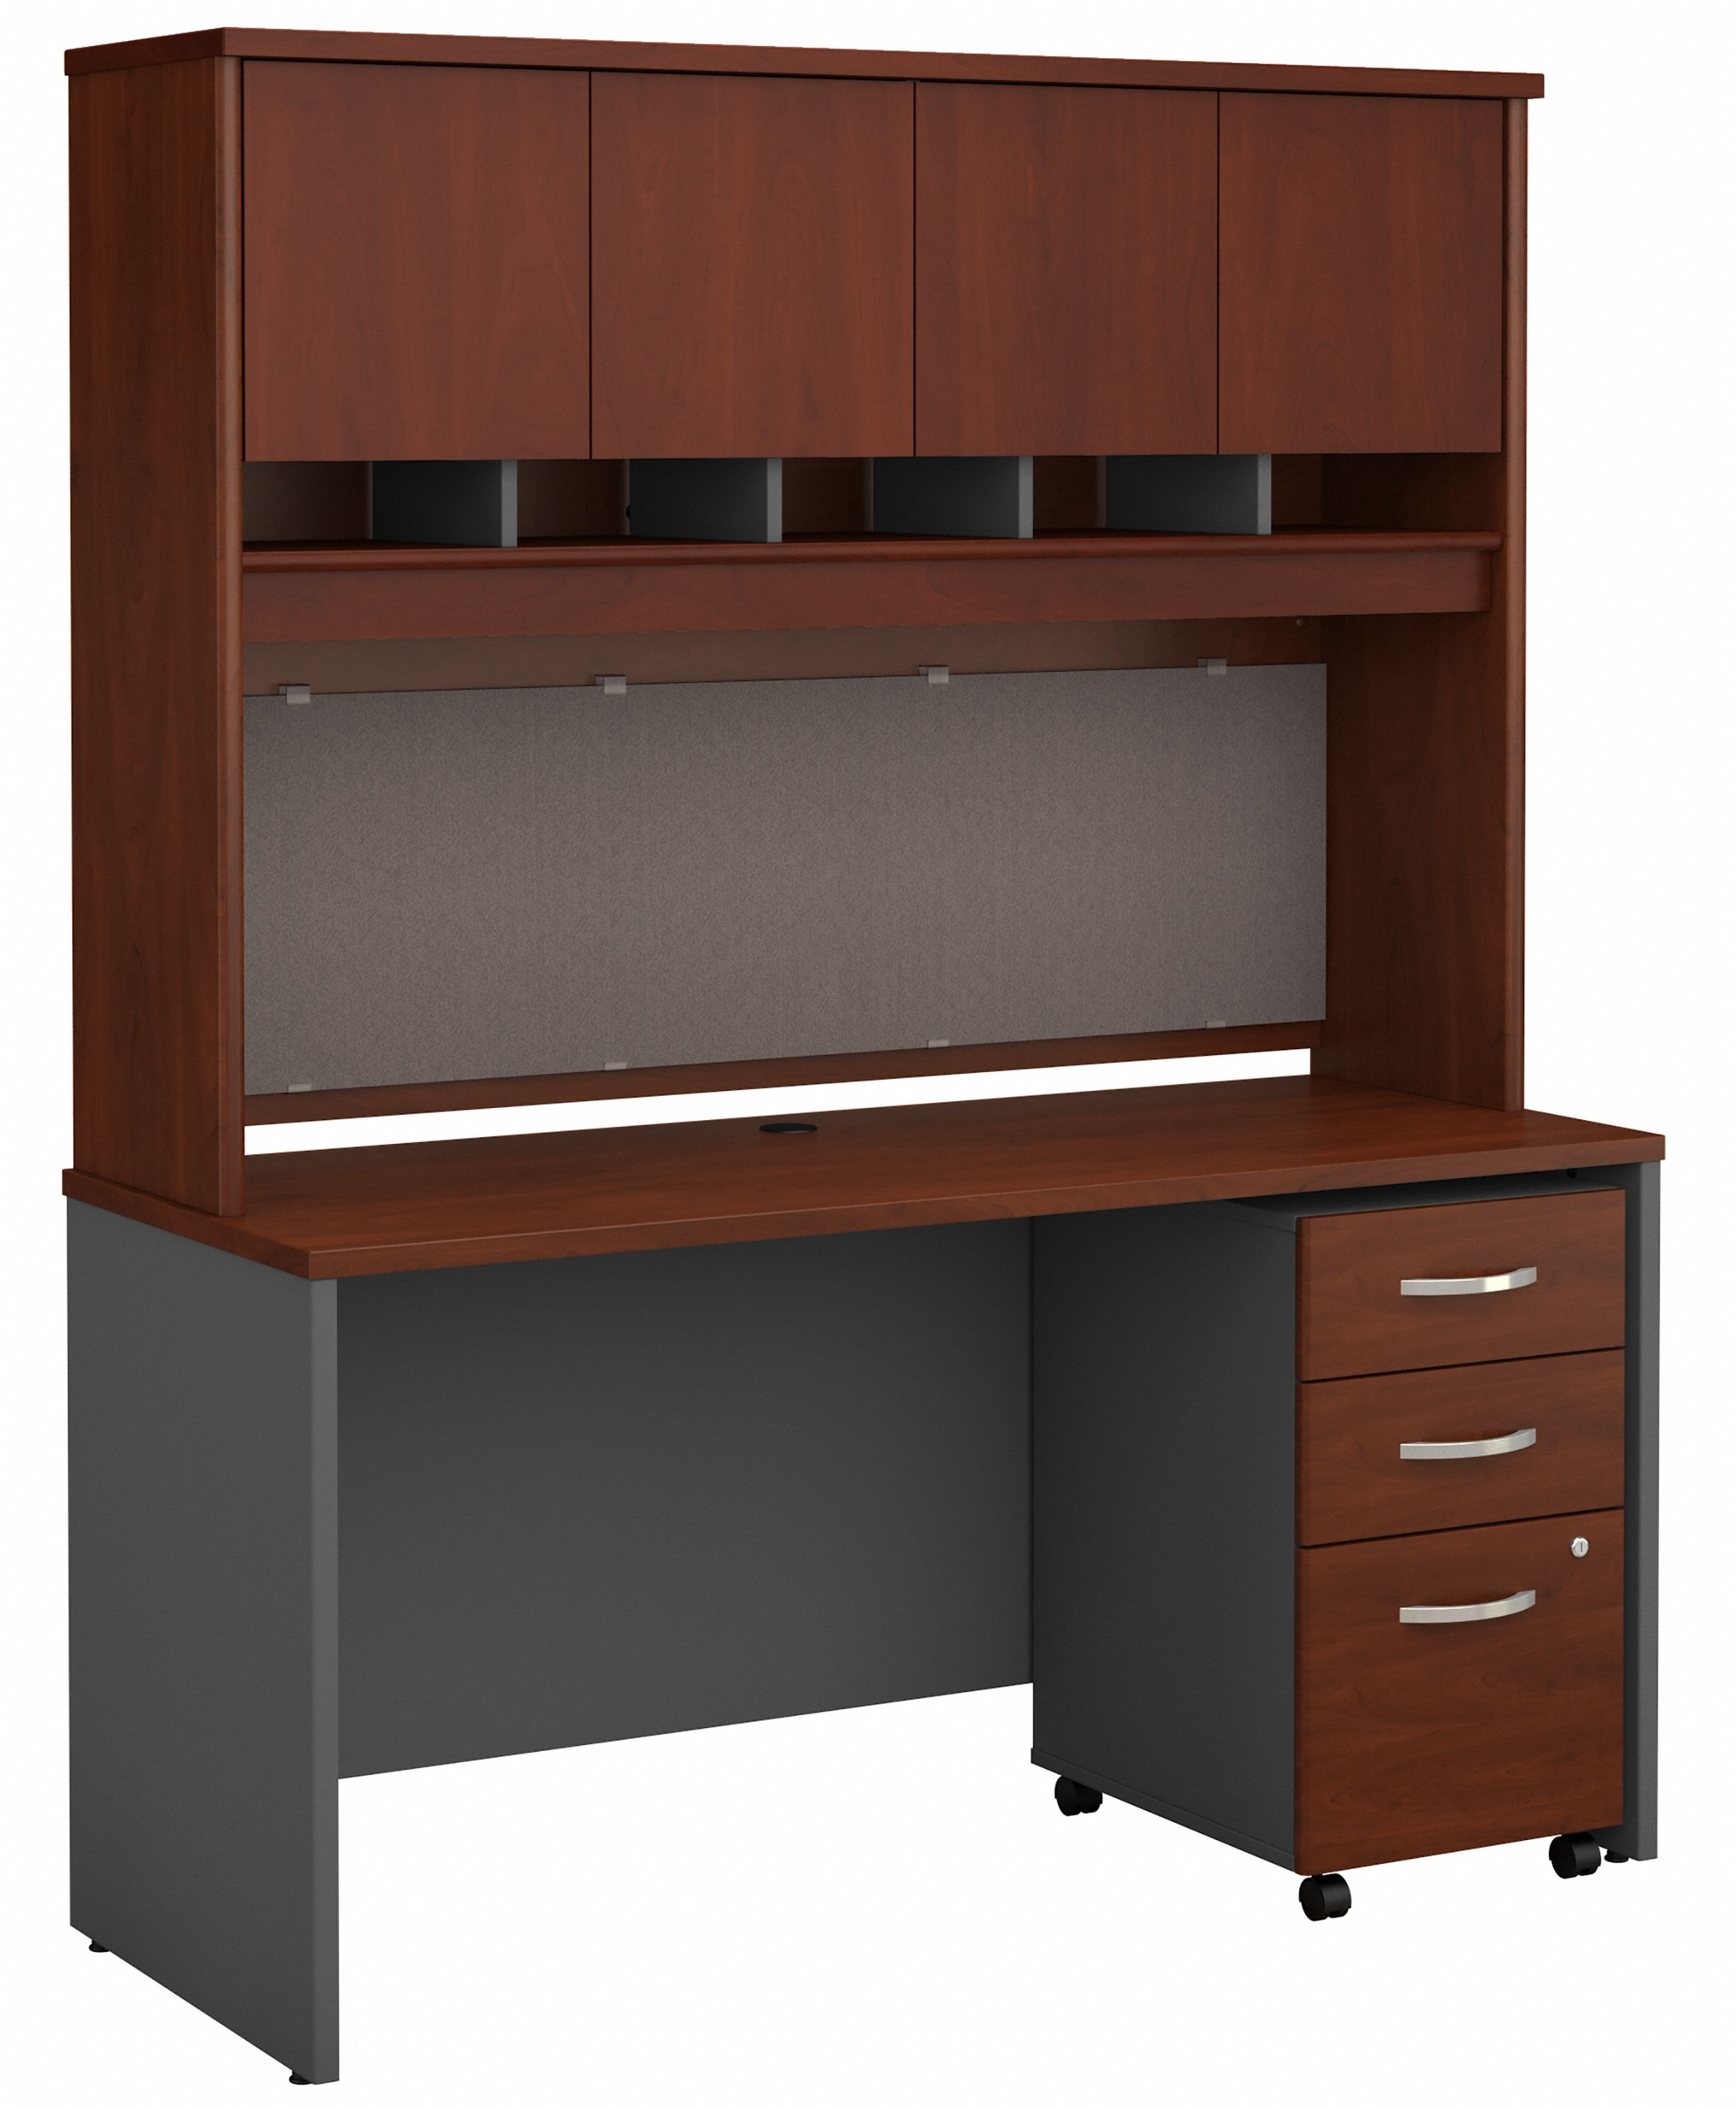 Shop Bush Business Furniture Series C 60W x 24D Office Desk with Hutch and Mobile File Cabinet 02 SRC014HCSU #color_hansen cherry